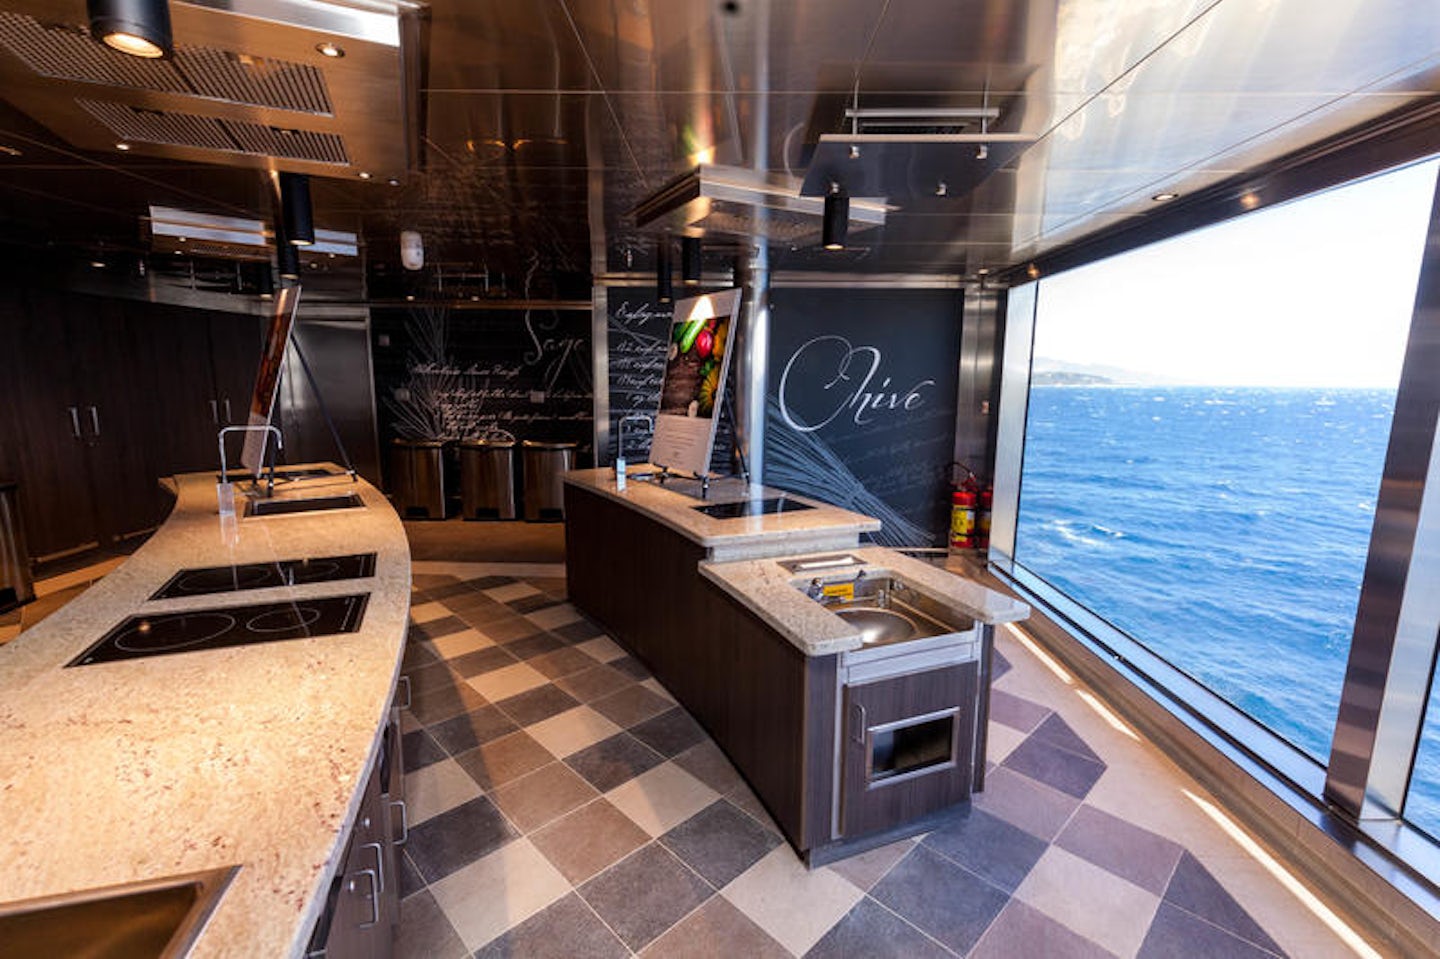 Culinary Arts Kitchen on Seven Seas Explorer